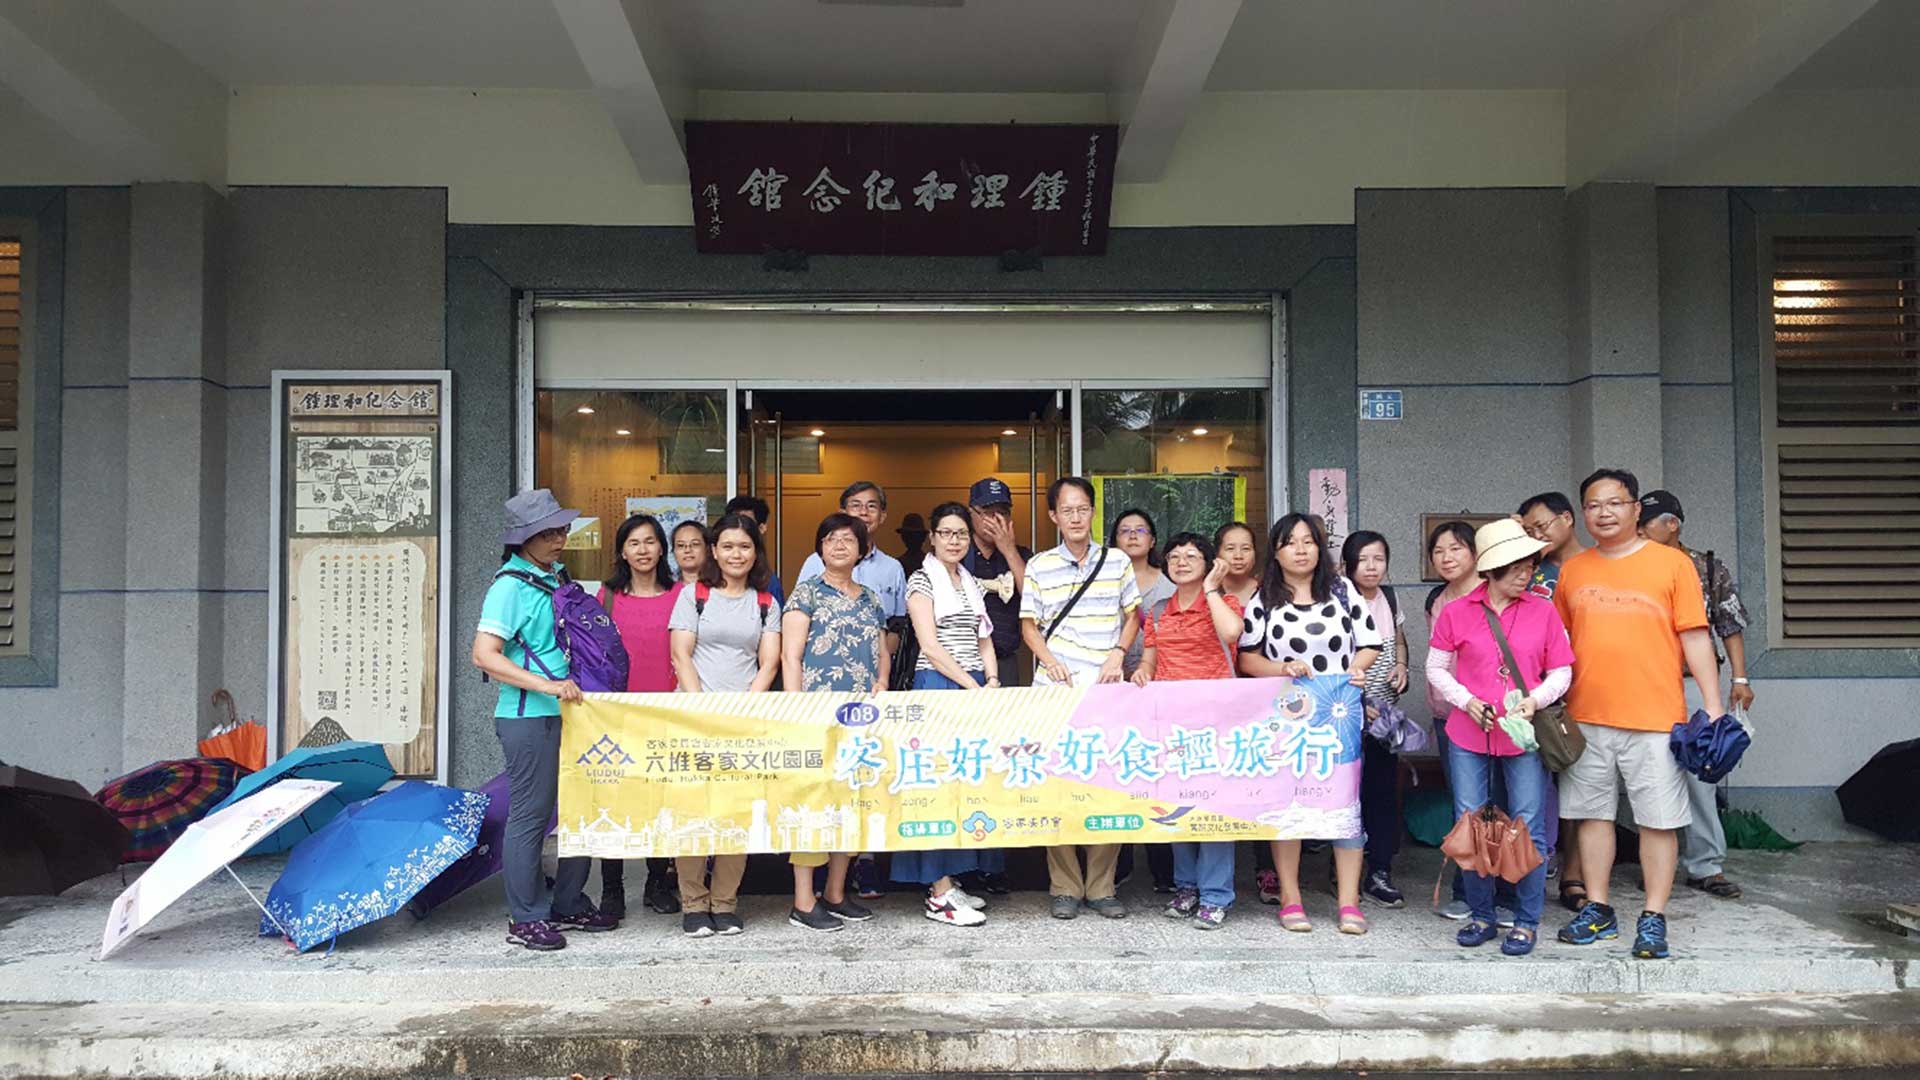 Liudui Hakka light trip with a pleasant tour and good food—Group photos taken in the Zhong Li-He Memorial Hall